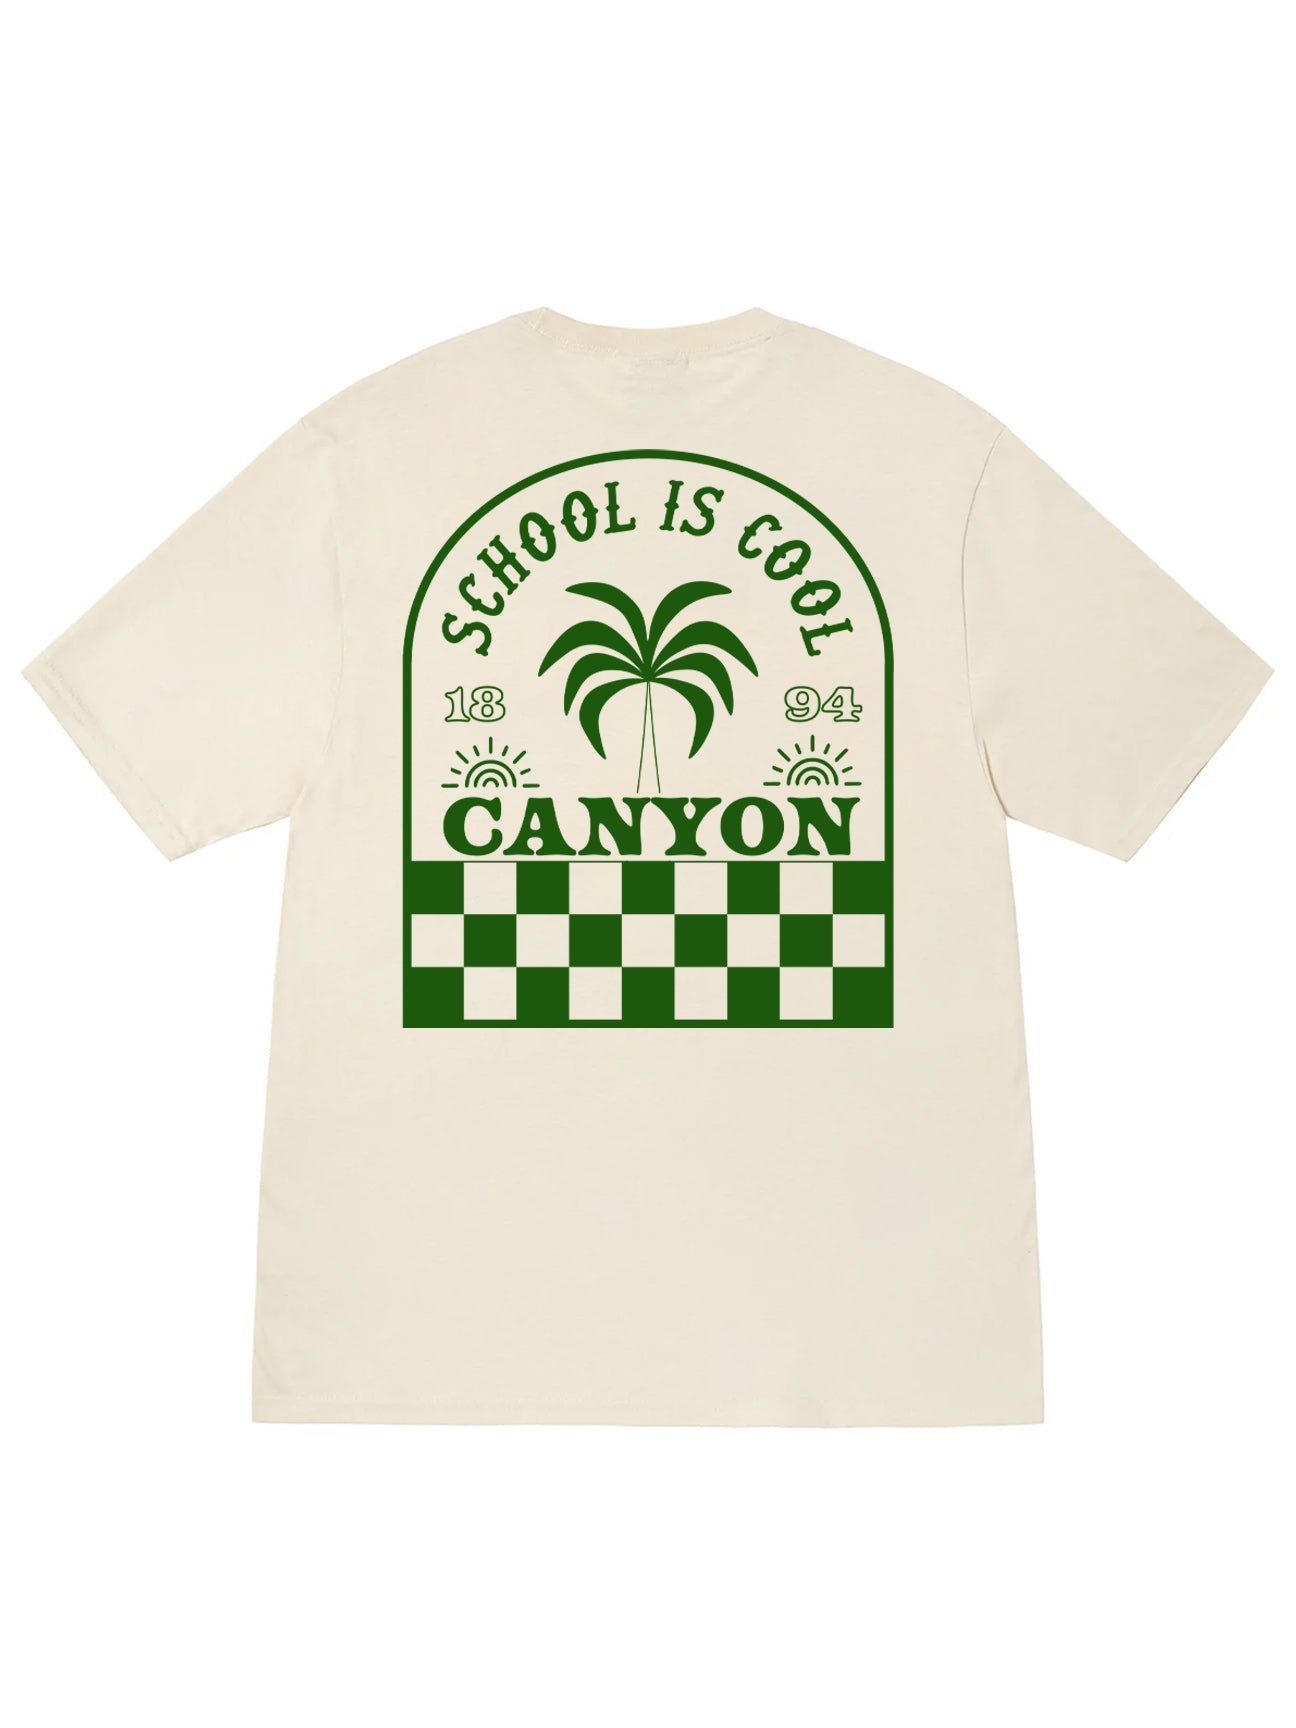 Canyon School is Cool Adult Tee